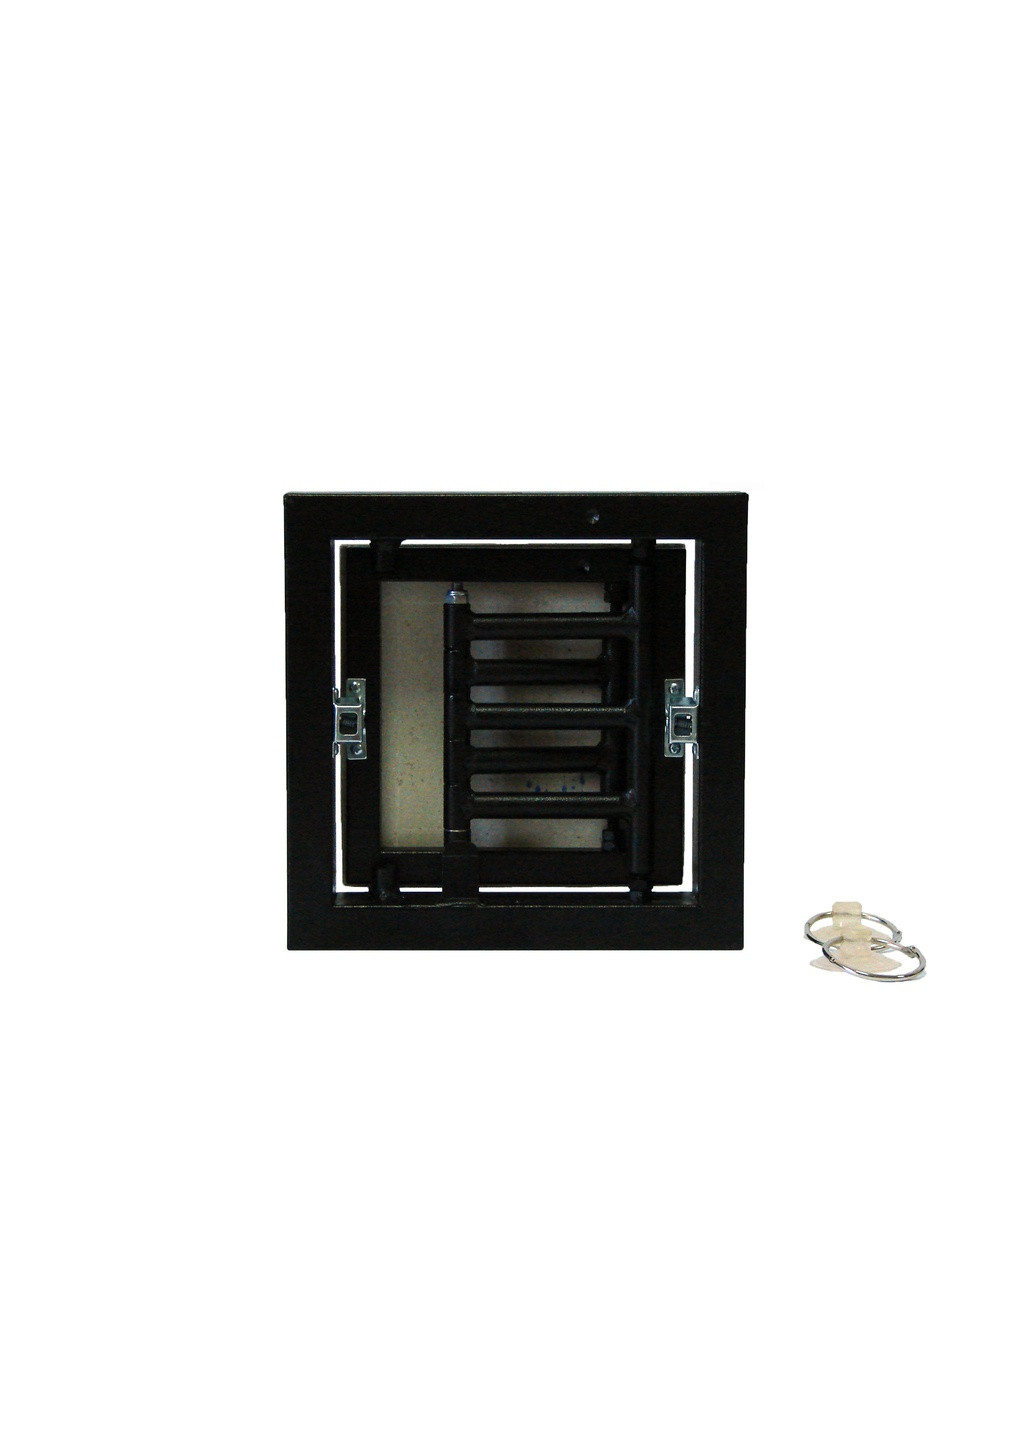 Ревизионный люк скрытого монтажа под плитку фронтальнораспашного типа 200x200 ревизионная дверца для плитки (1201) S-Dom (266339648)